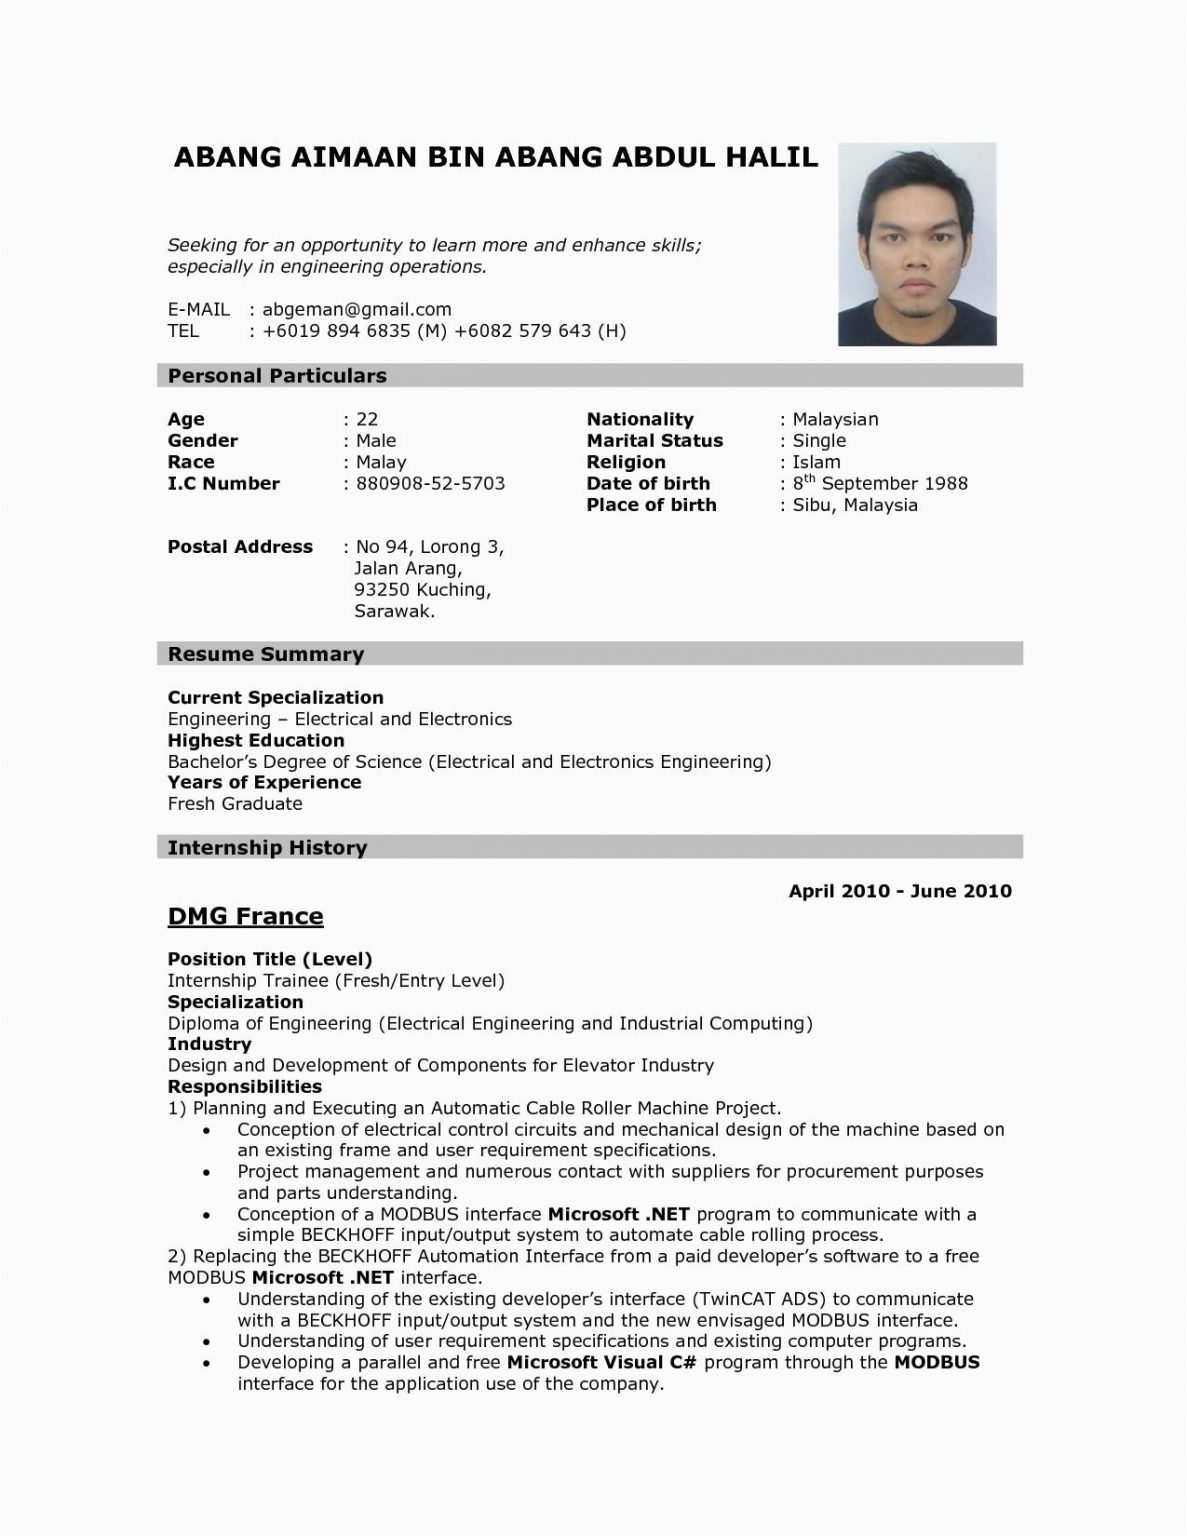 job application online